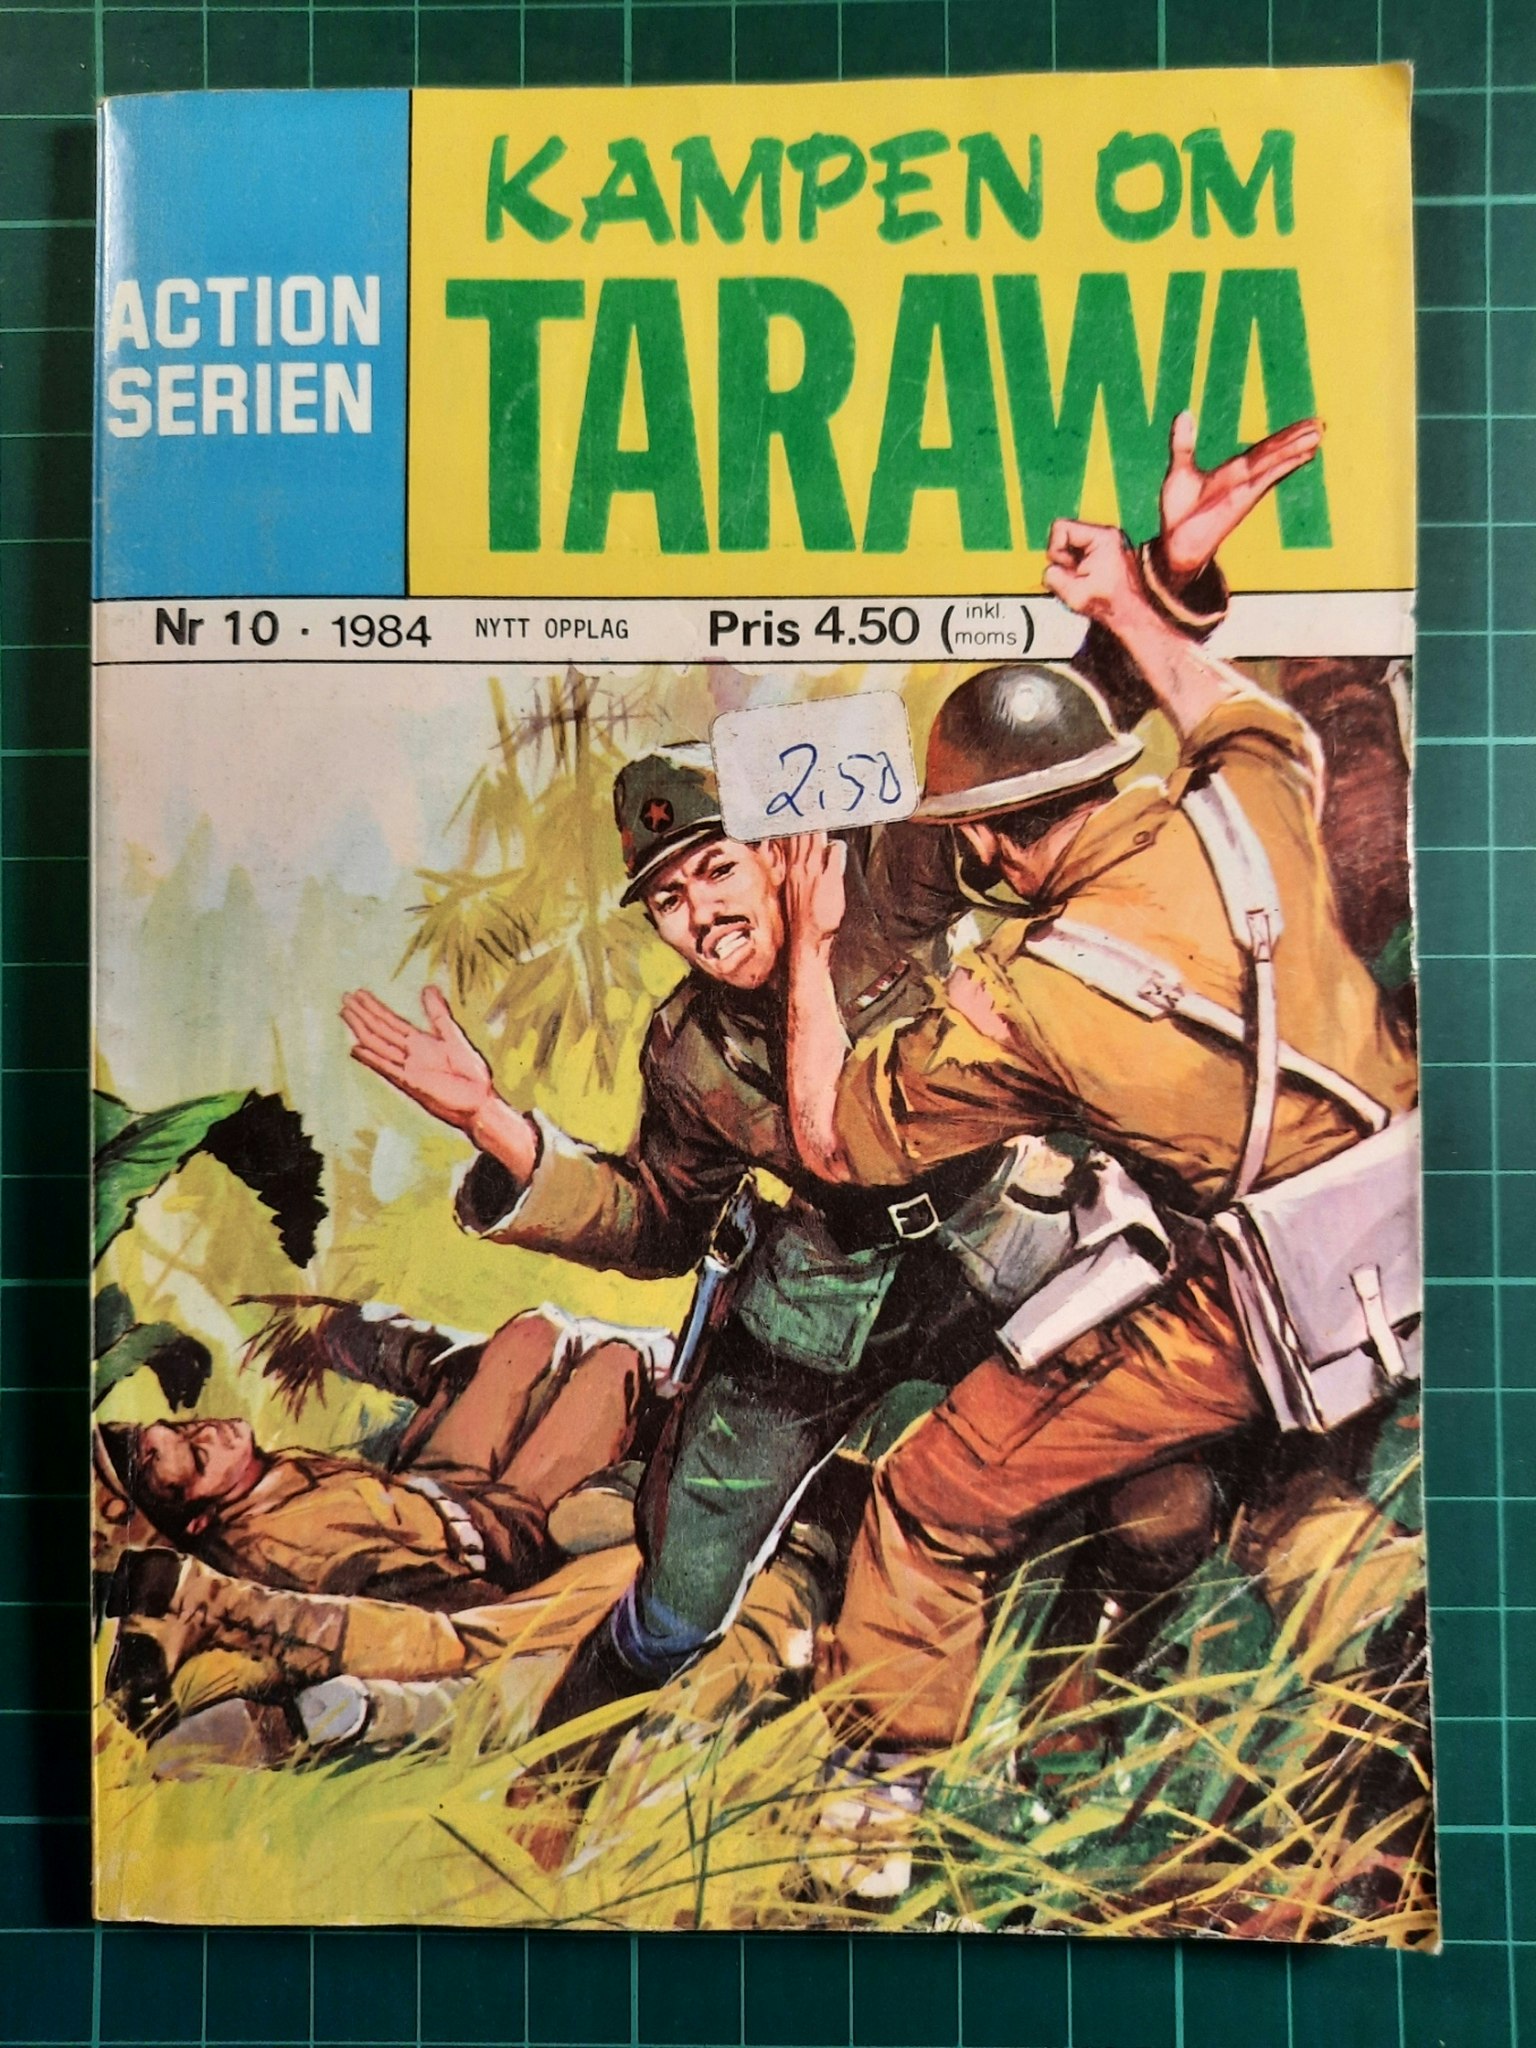 Action serien 1984 - 10